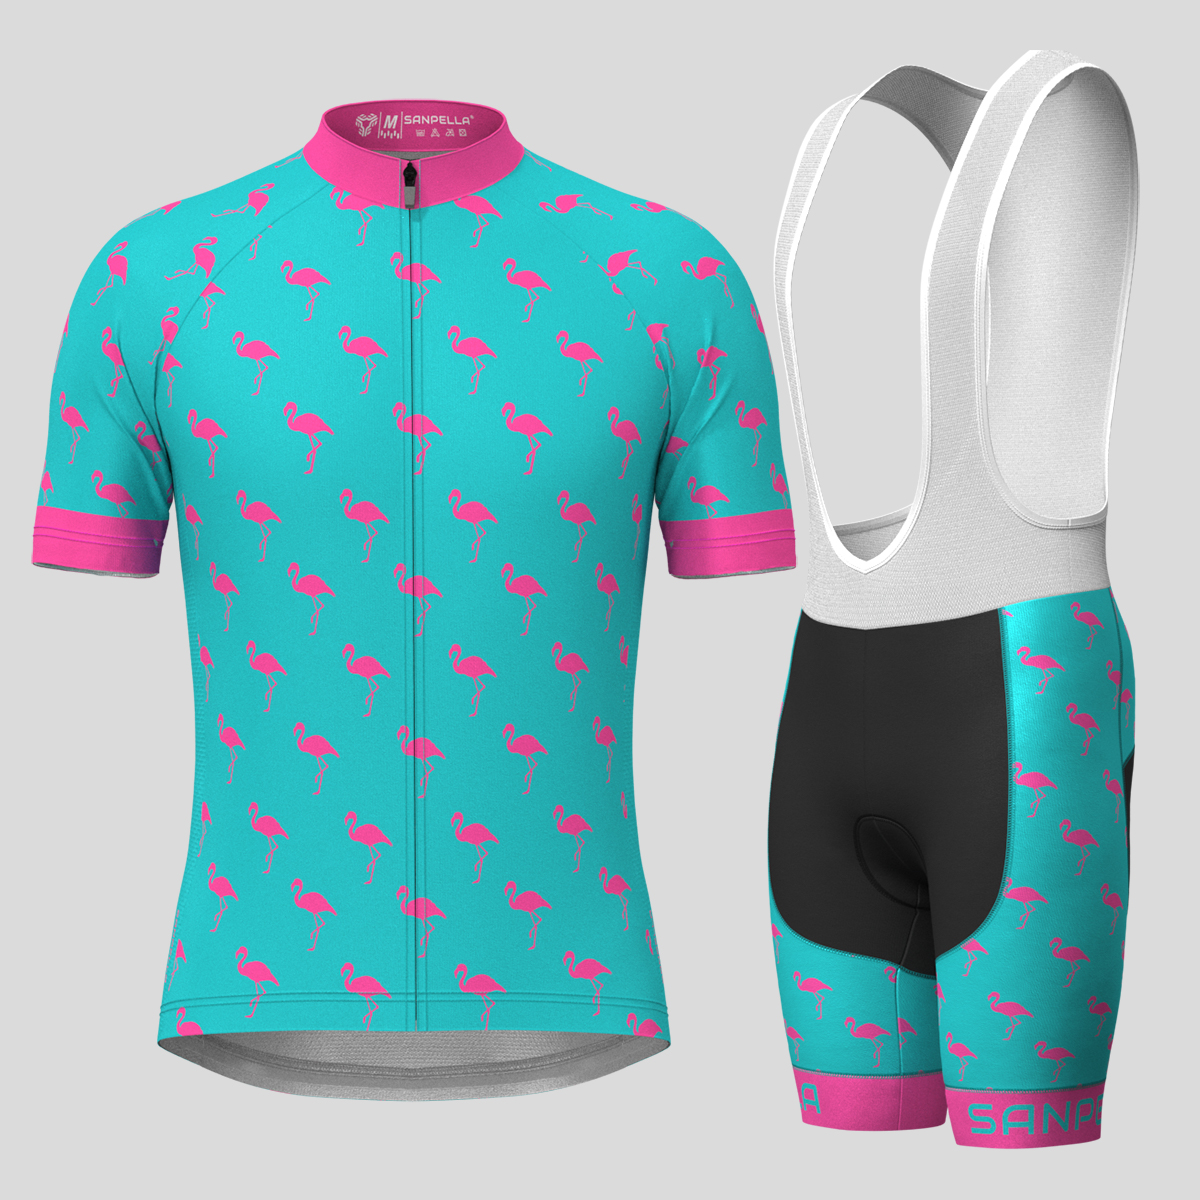 Flamingo Men's Cycling Kit - Pink/Blue